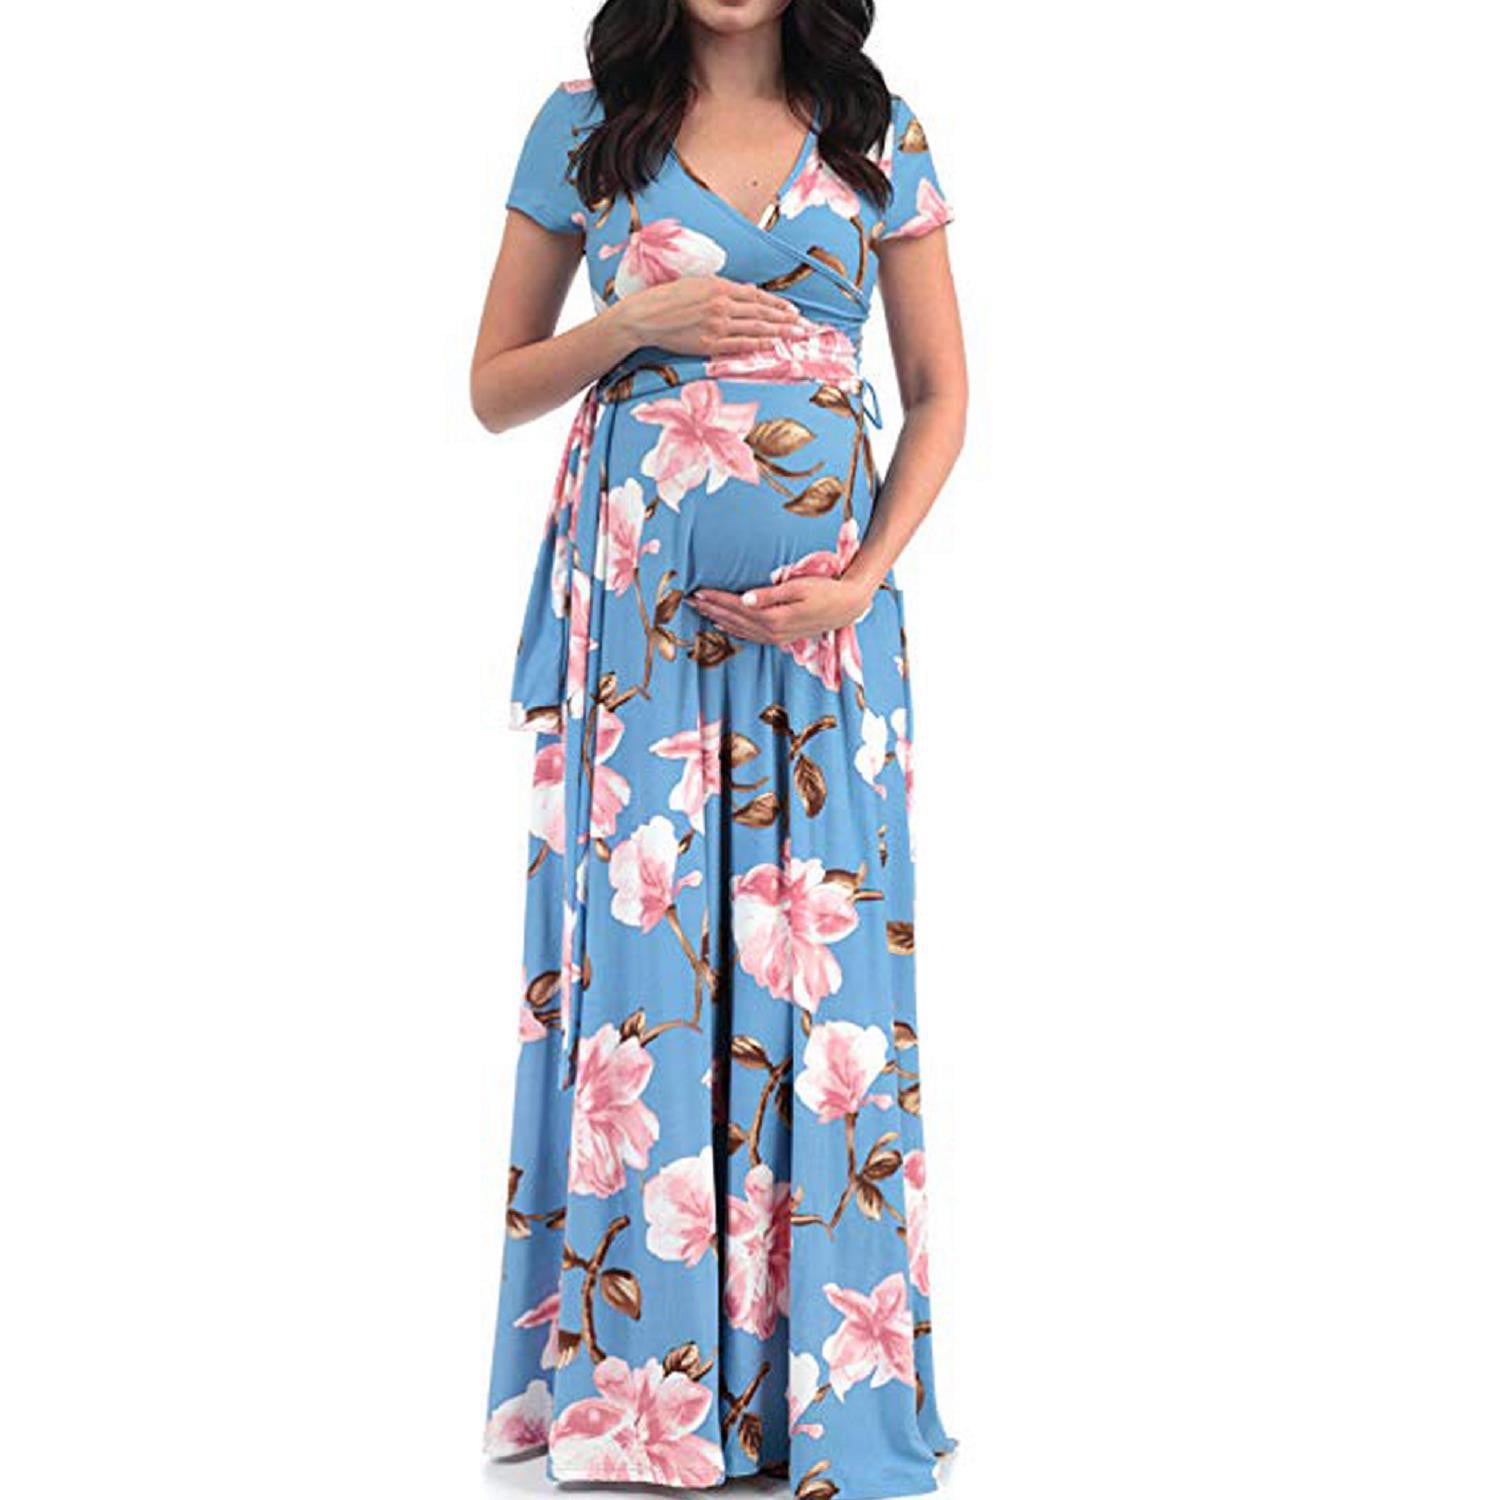 Pregnant Women Summer Casual Mini Dress Evening Party Maternity Dresses Clothes